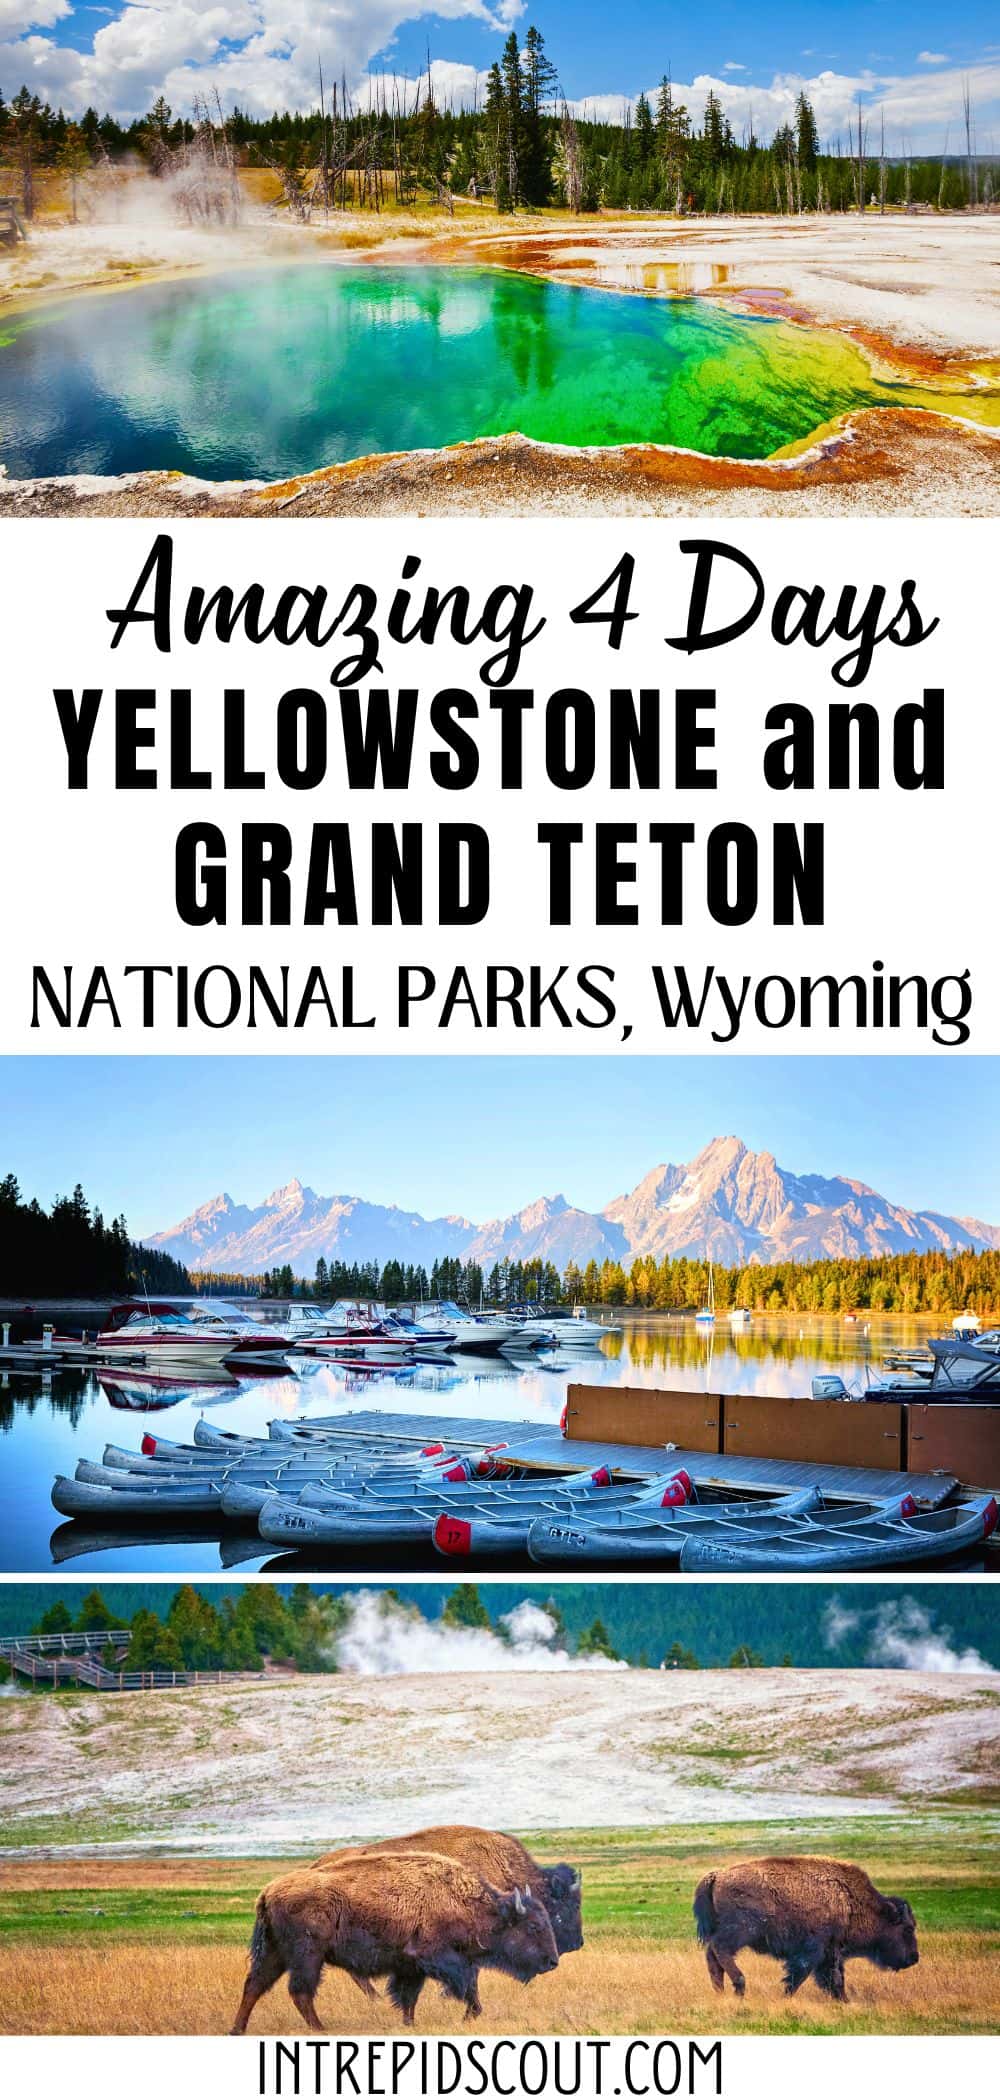 4 Days in Yellowstone and Grand Teton